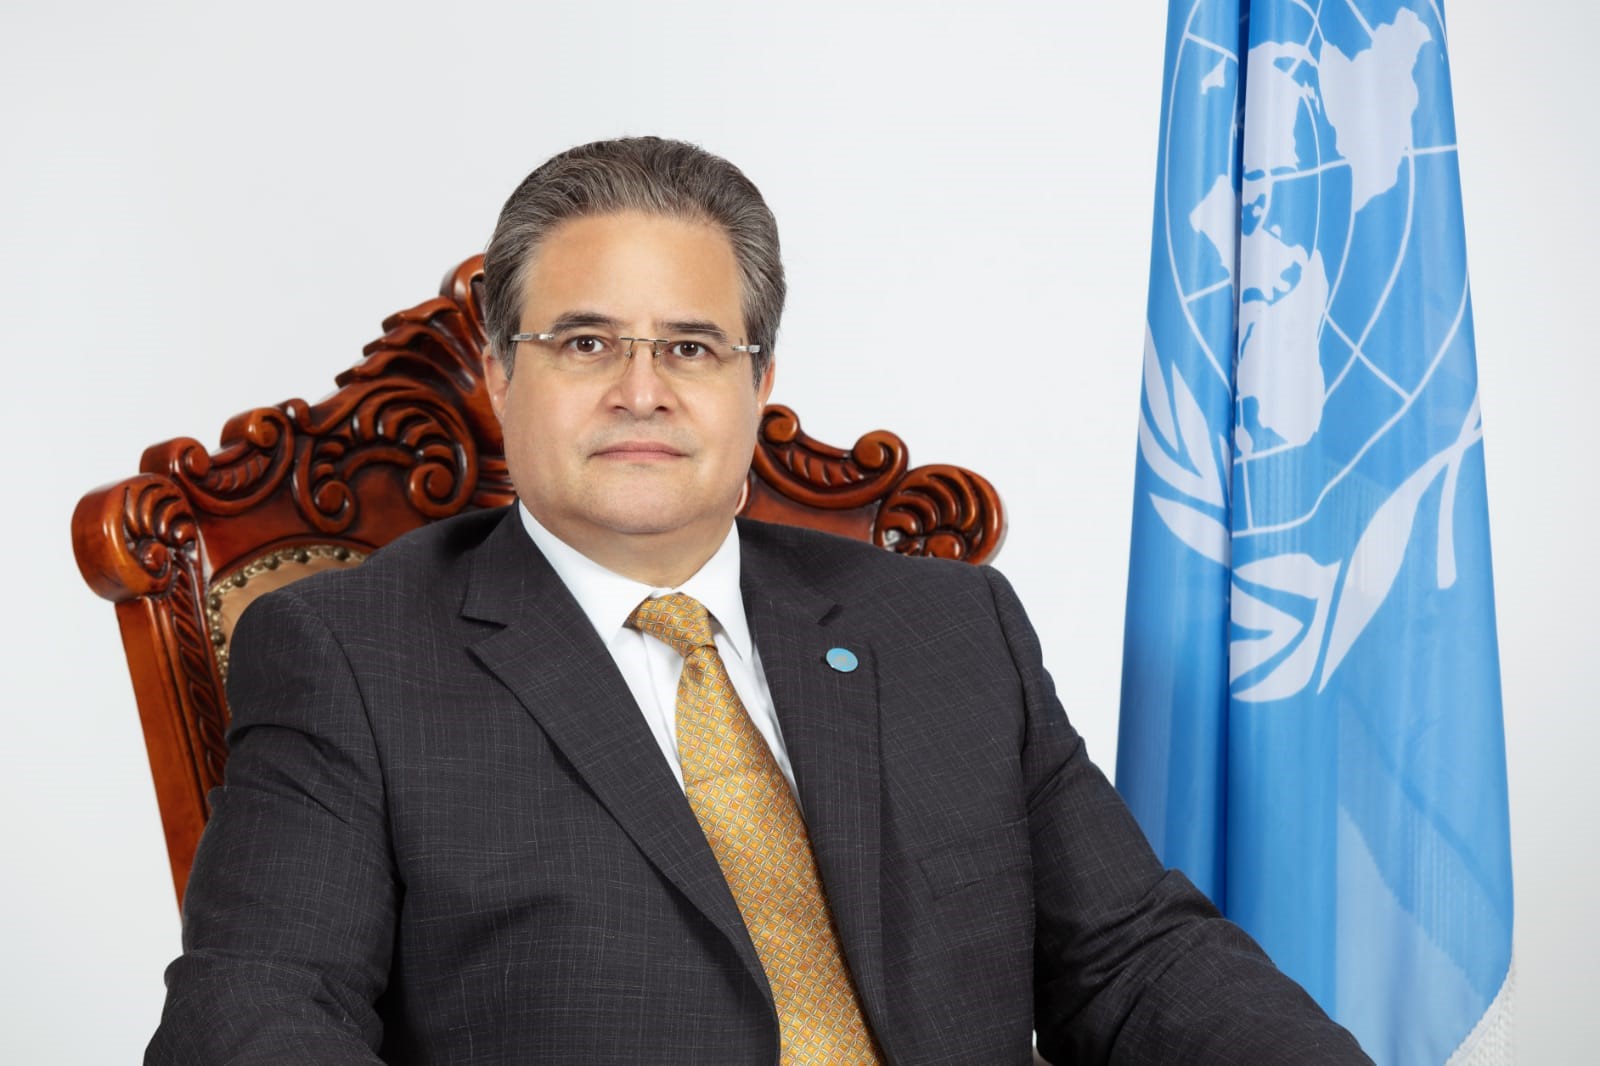 UN Secretary General and Resident Coordinator in Kuwait Dr. Tareq Al-Sheikh